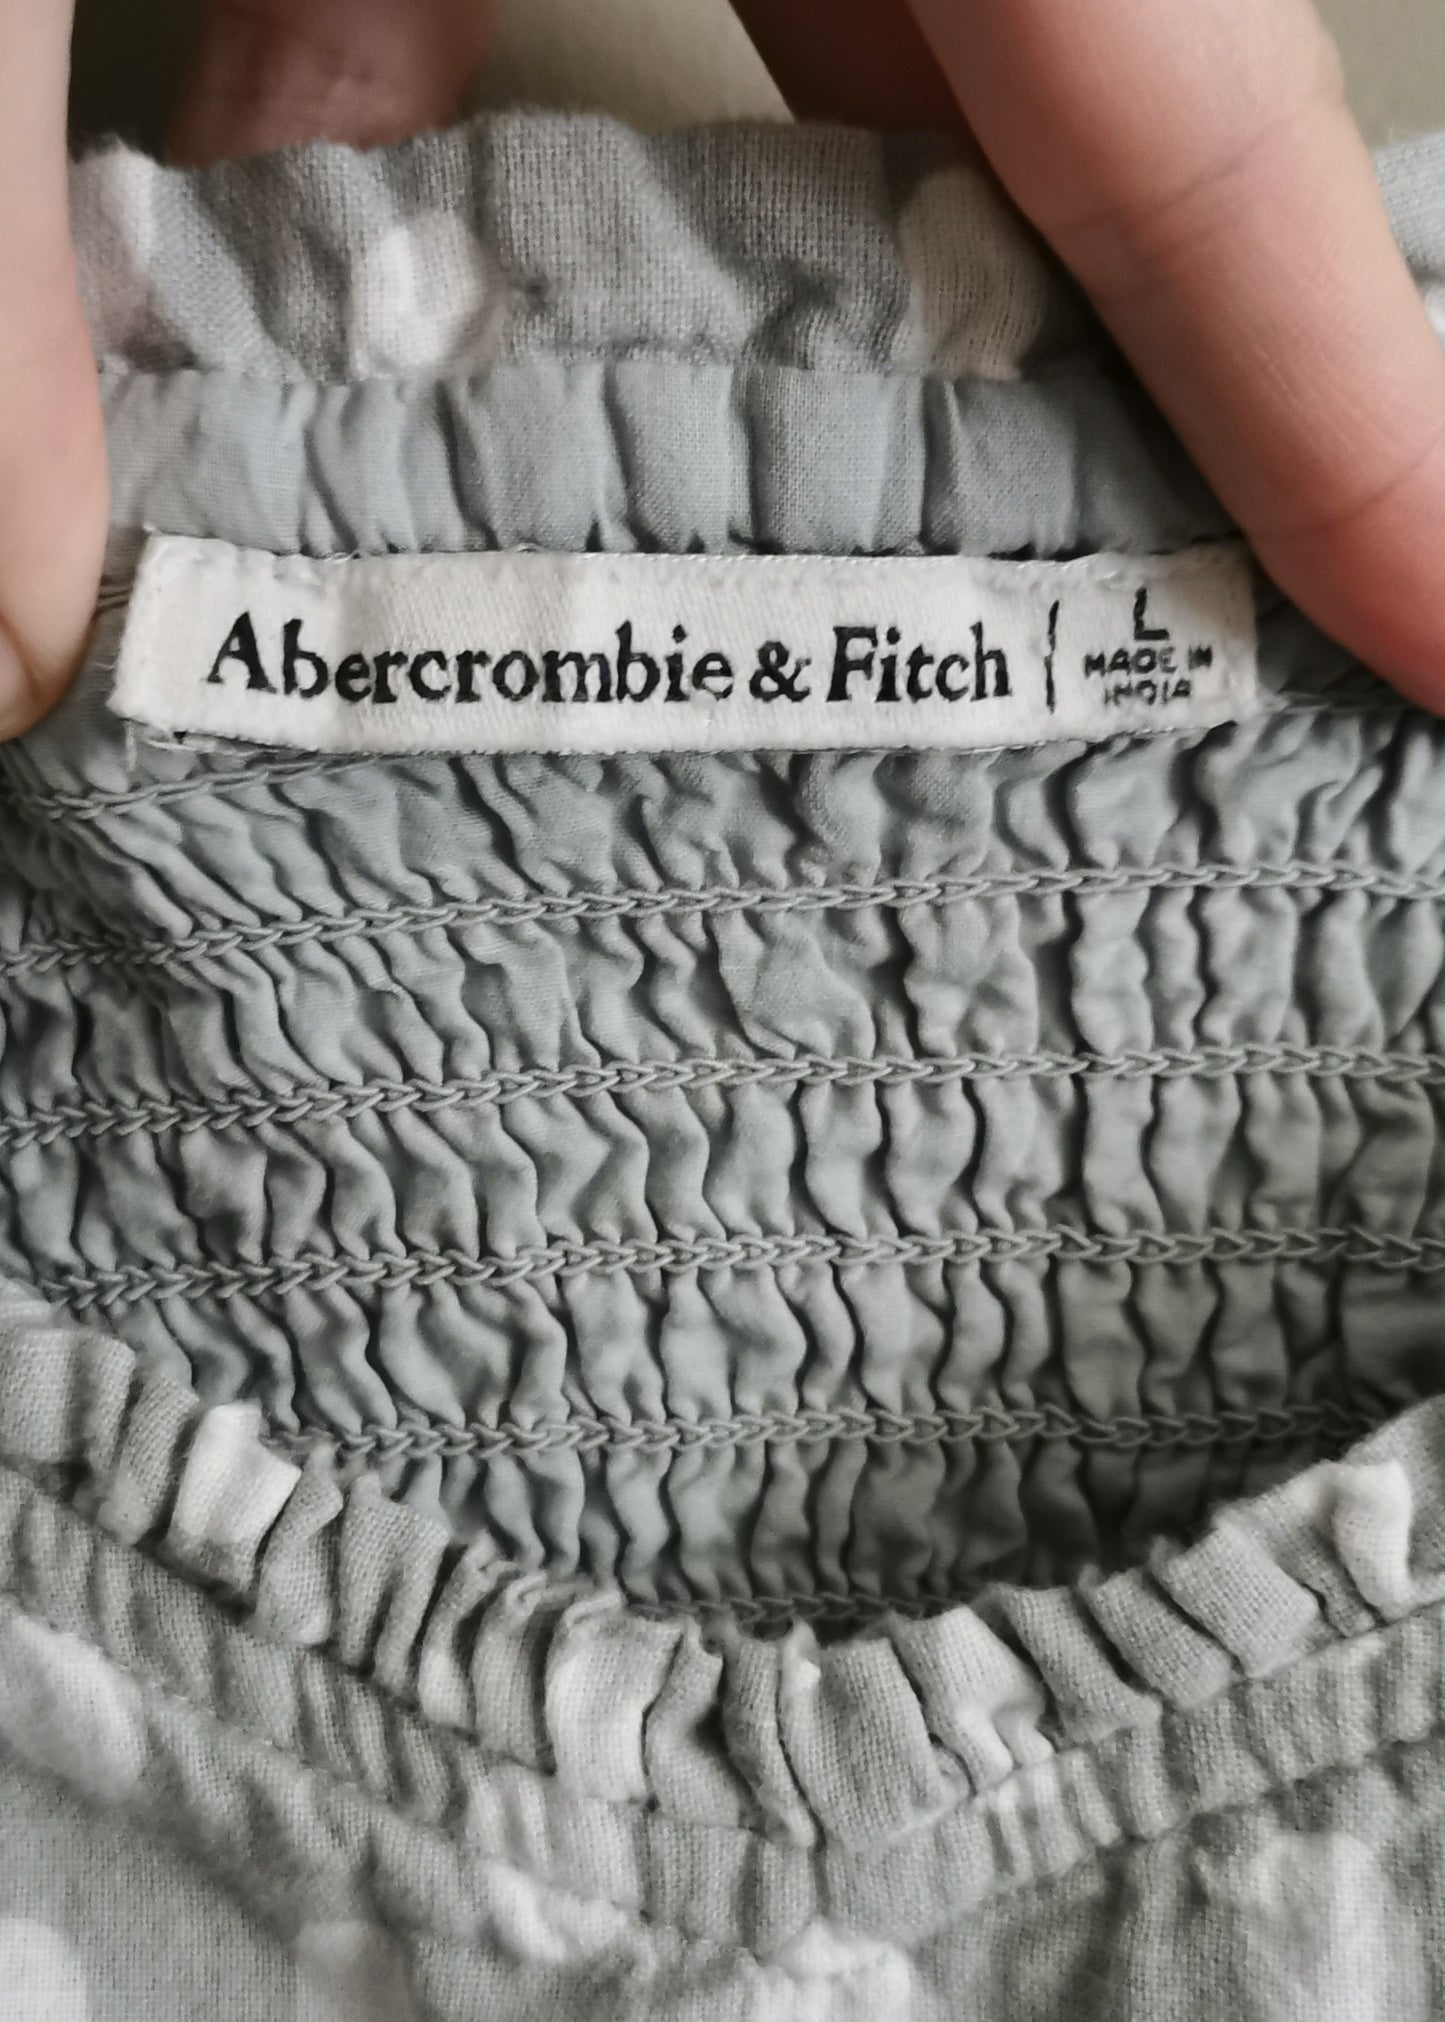 Abercrombie & Fitch Cotton Top (L)*